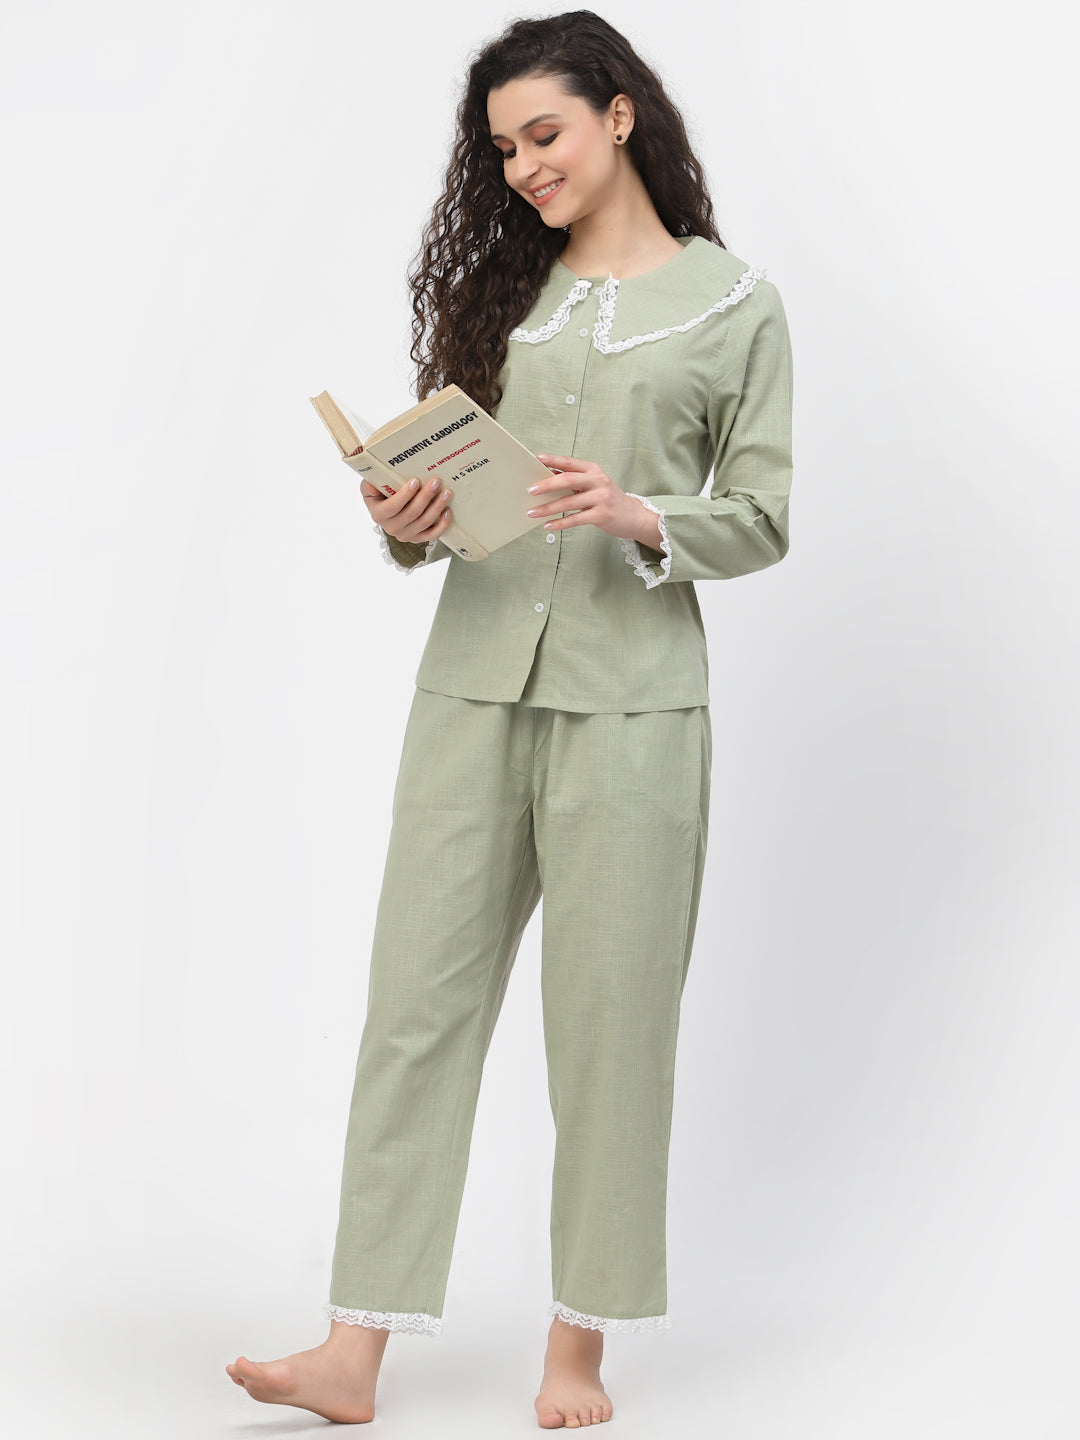 Blanc9 Lacy Cotton Green Pretty Pyjama Night Suit-B9NW41GN